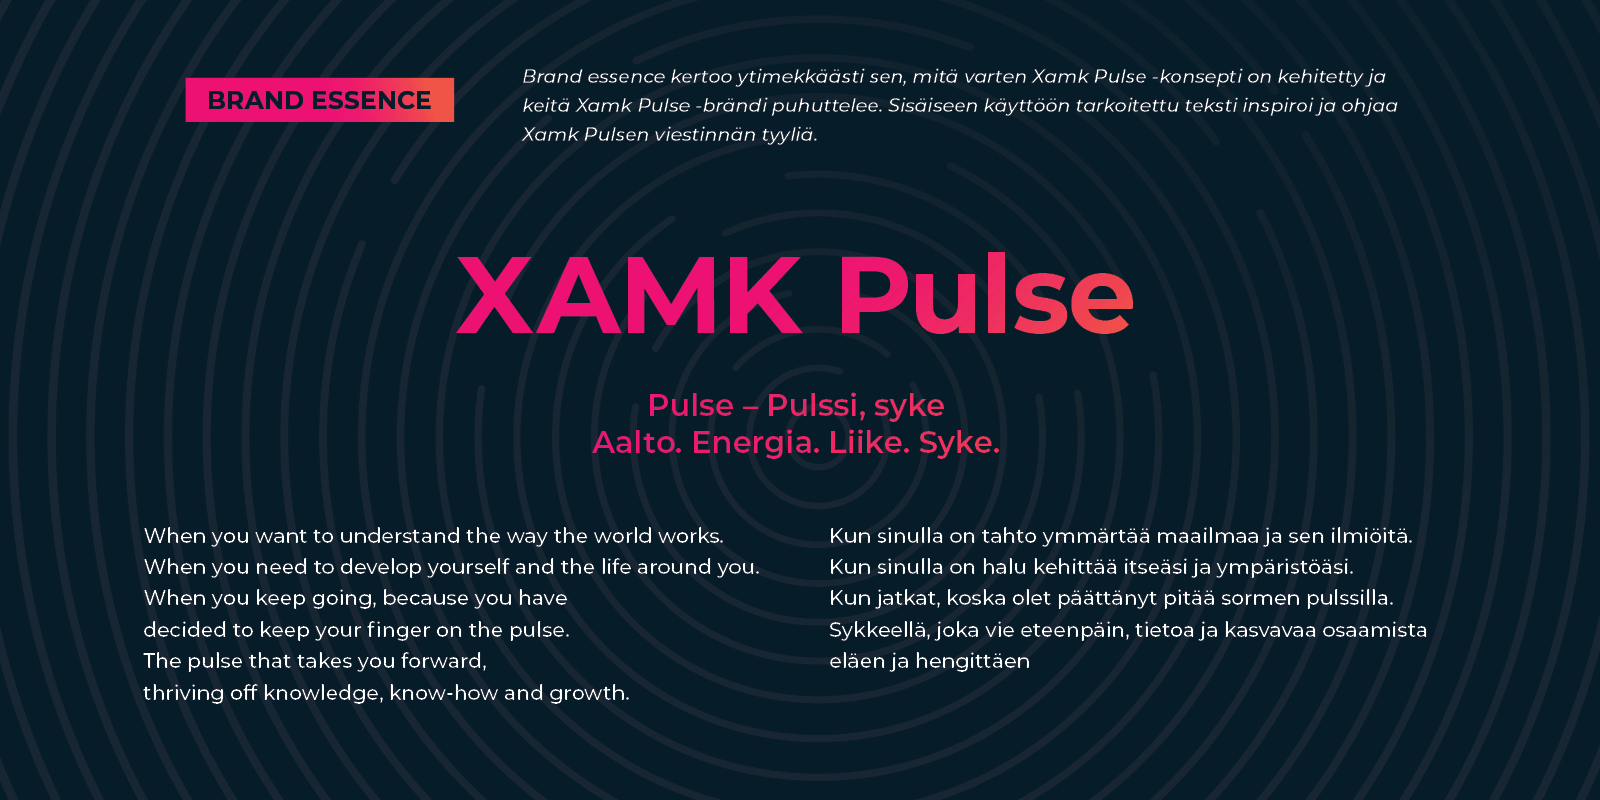 Xamk Pulse brand essence